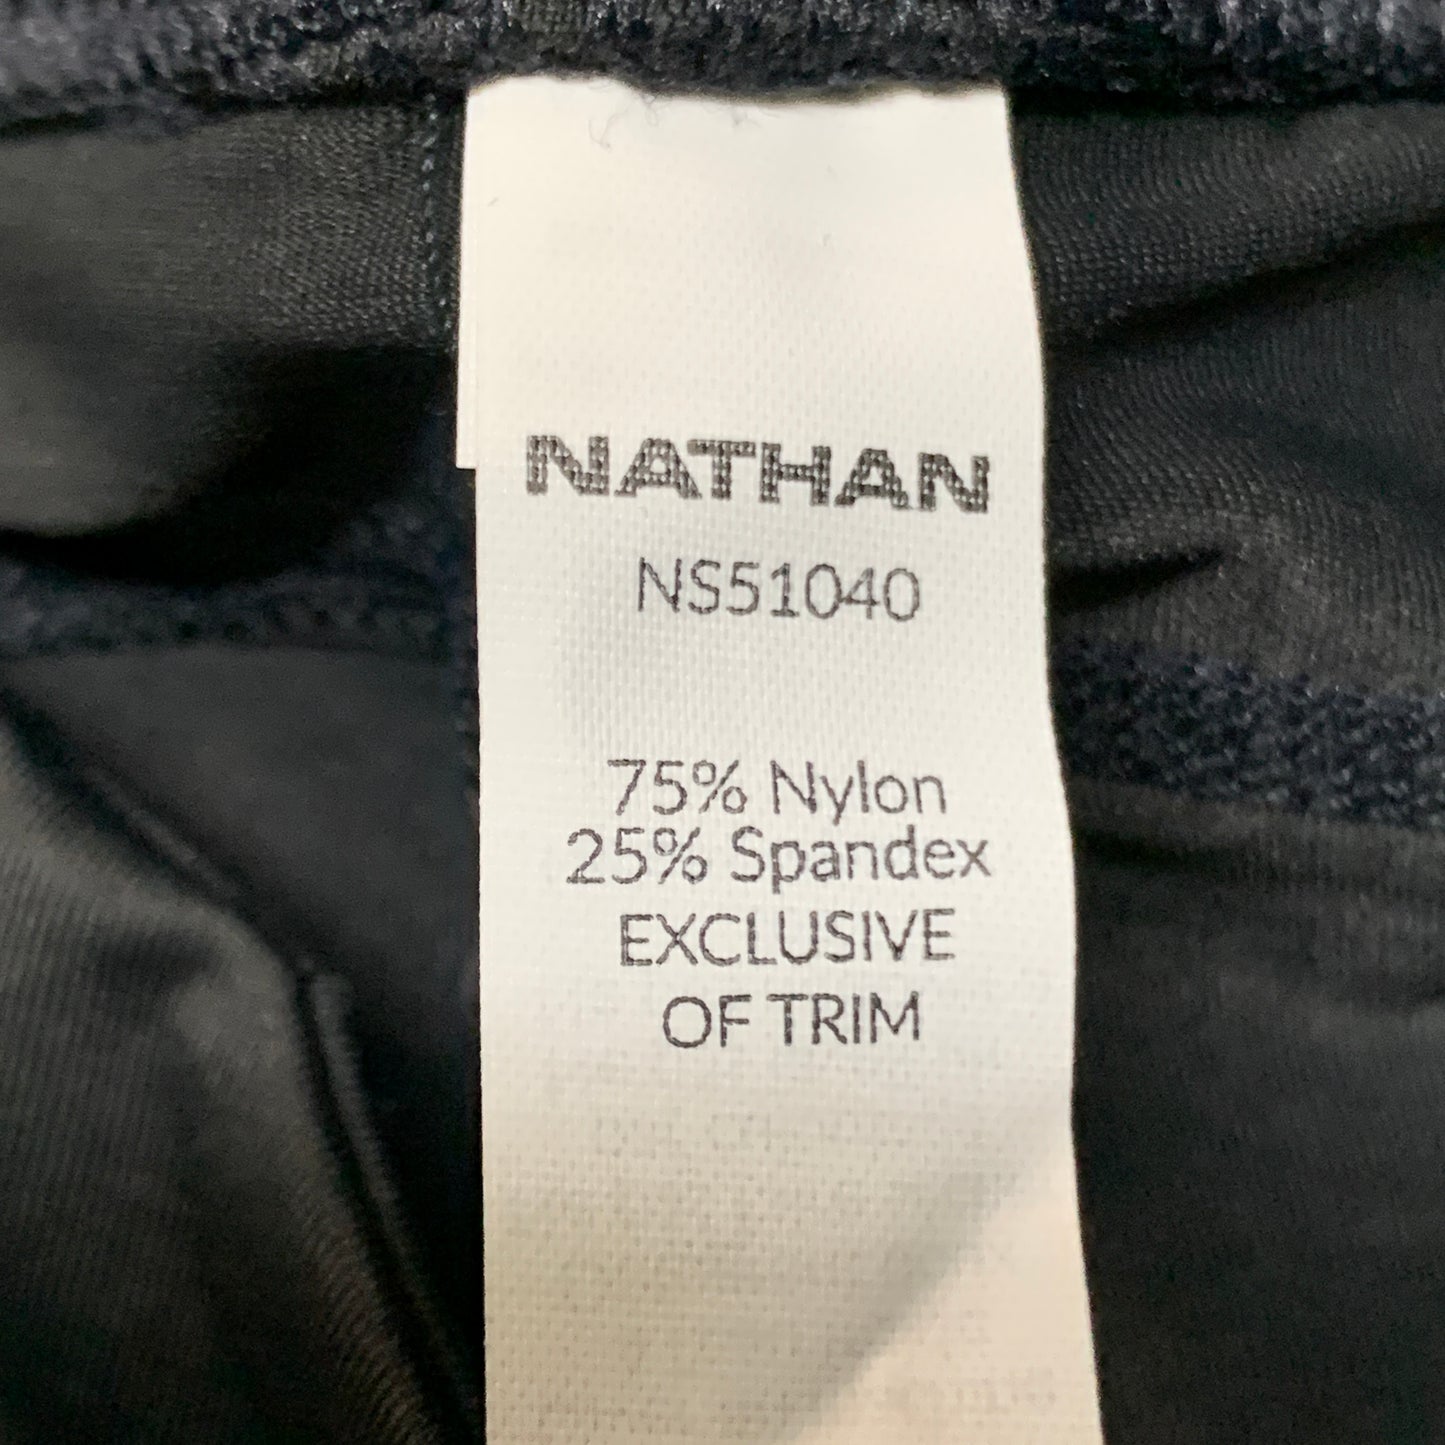 NATHAN Interval 3" Inseam Bike Short Women's Black Size XS NS51040-00001-XS